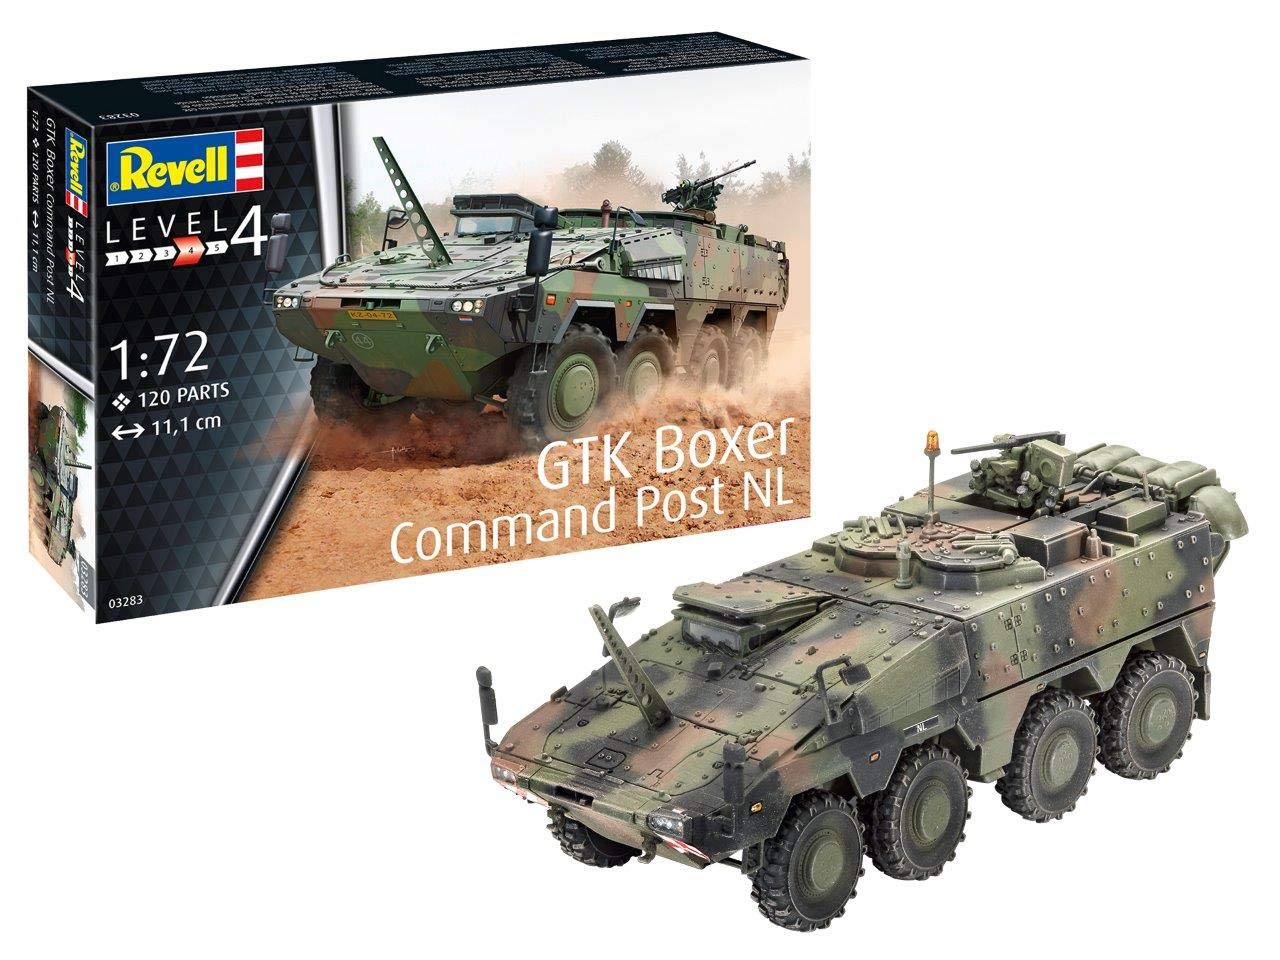 Revell 03283 Gtk Boxer Command Post Nl Accurate Advanced Model Kit 1/72 Mul